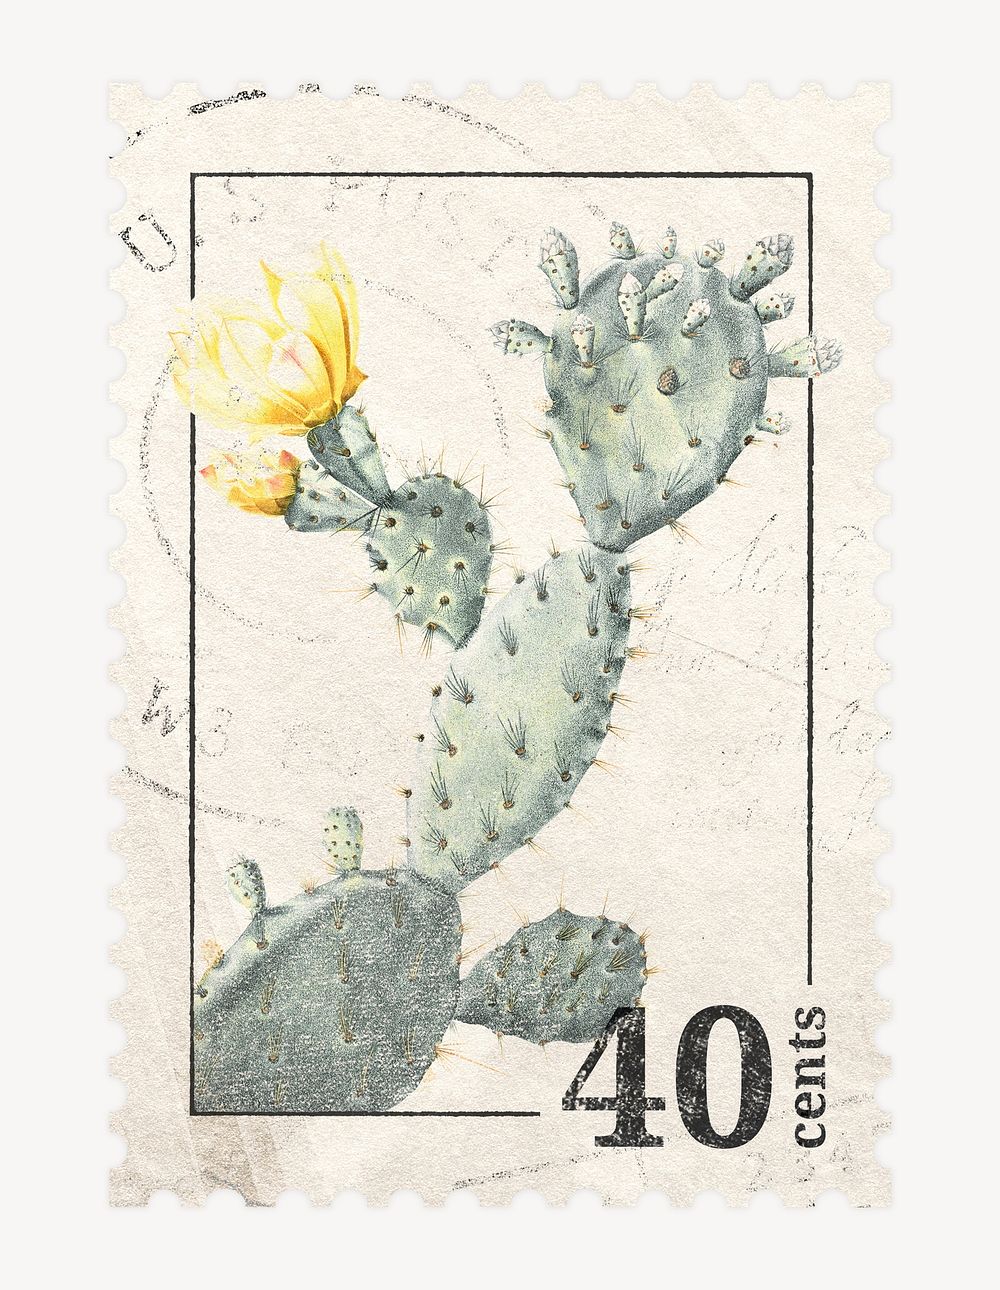 Aesthetic cactus postage stamp, ephemera illustration